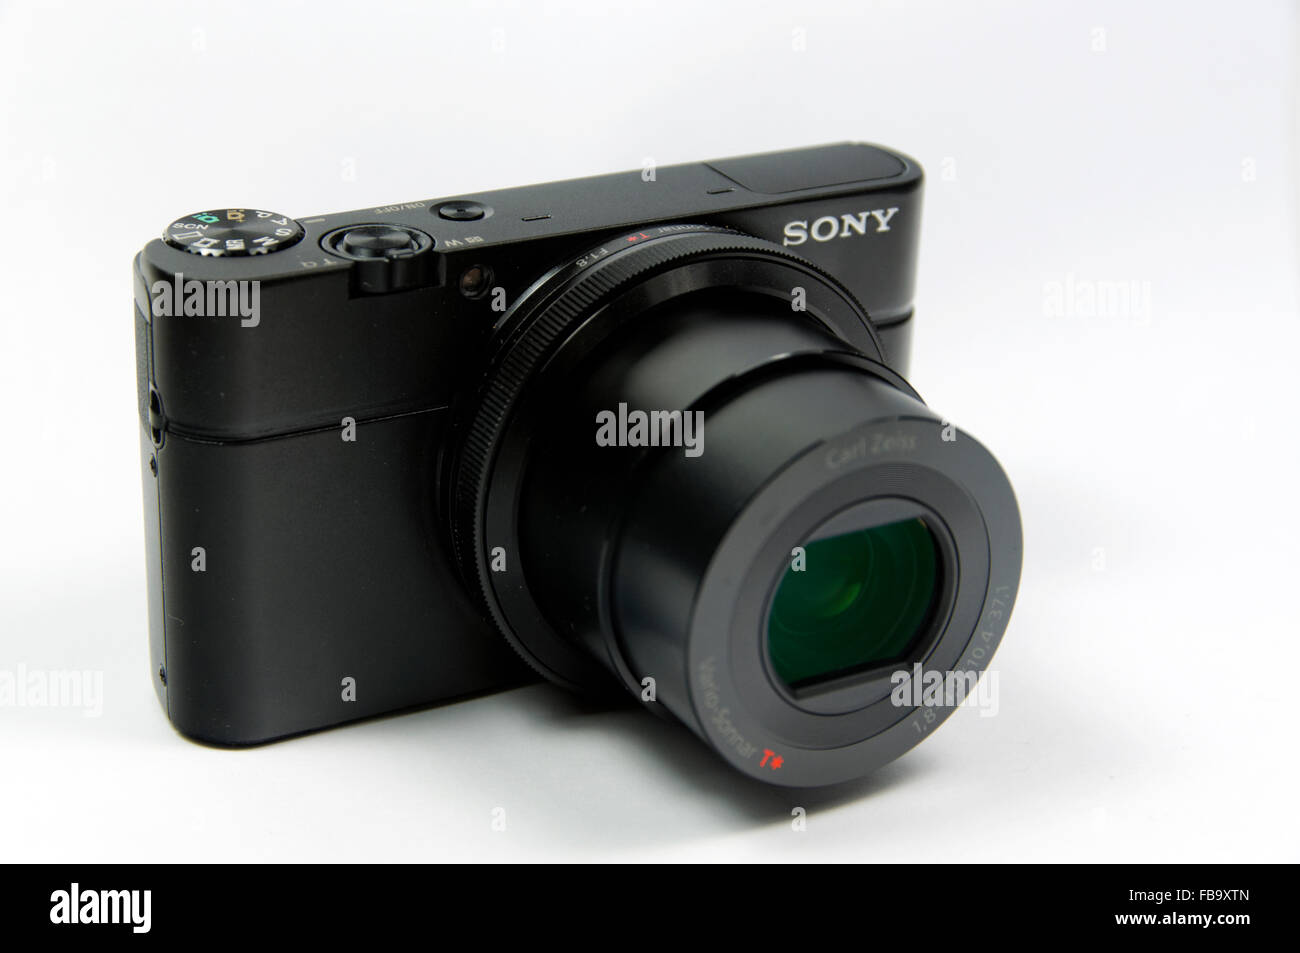 Sony RX100 compact digital camera. Stock Photo